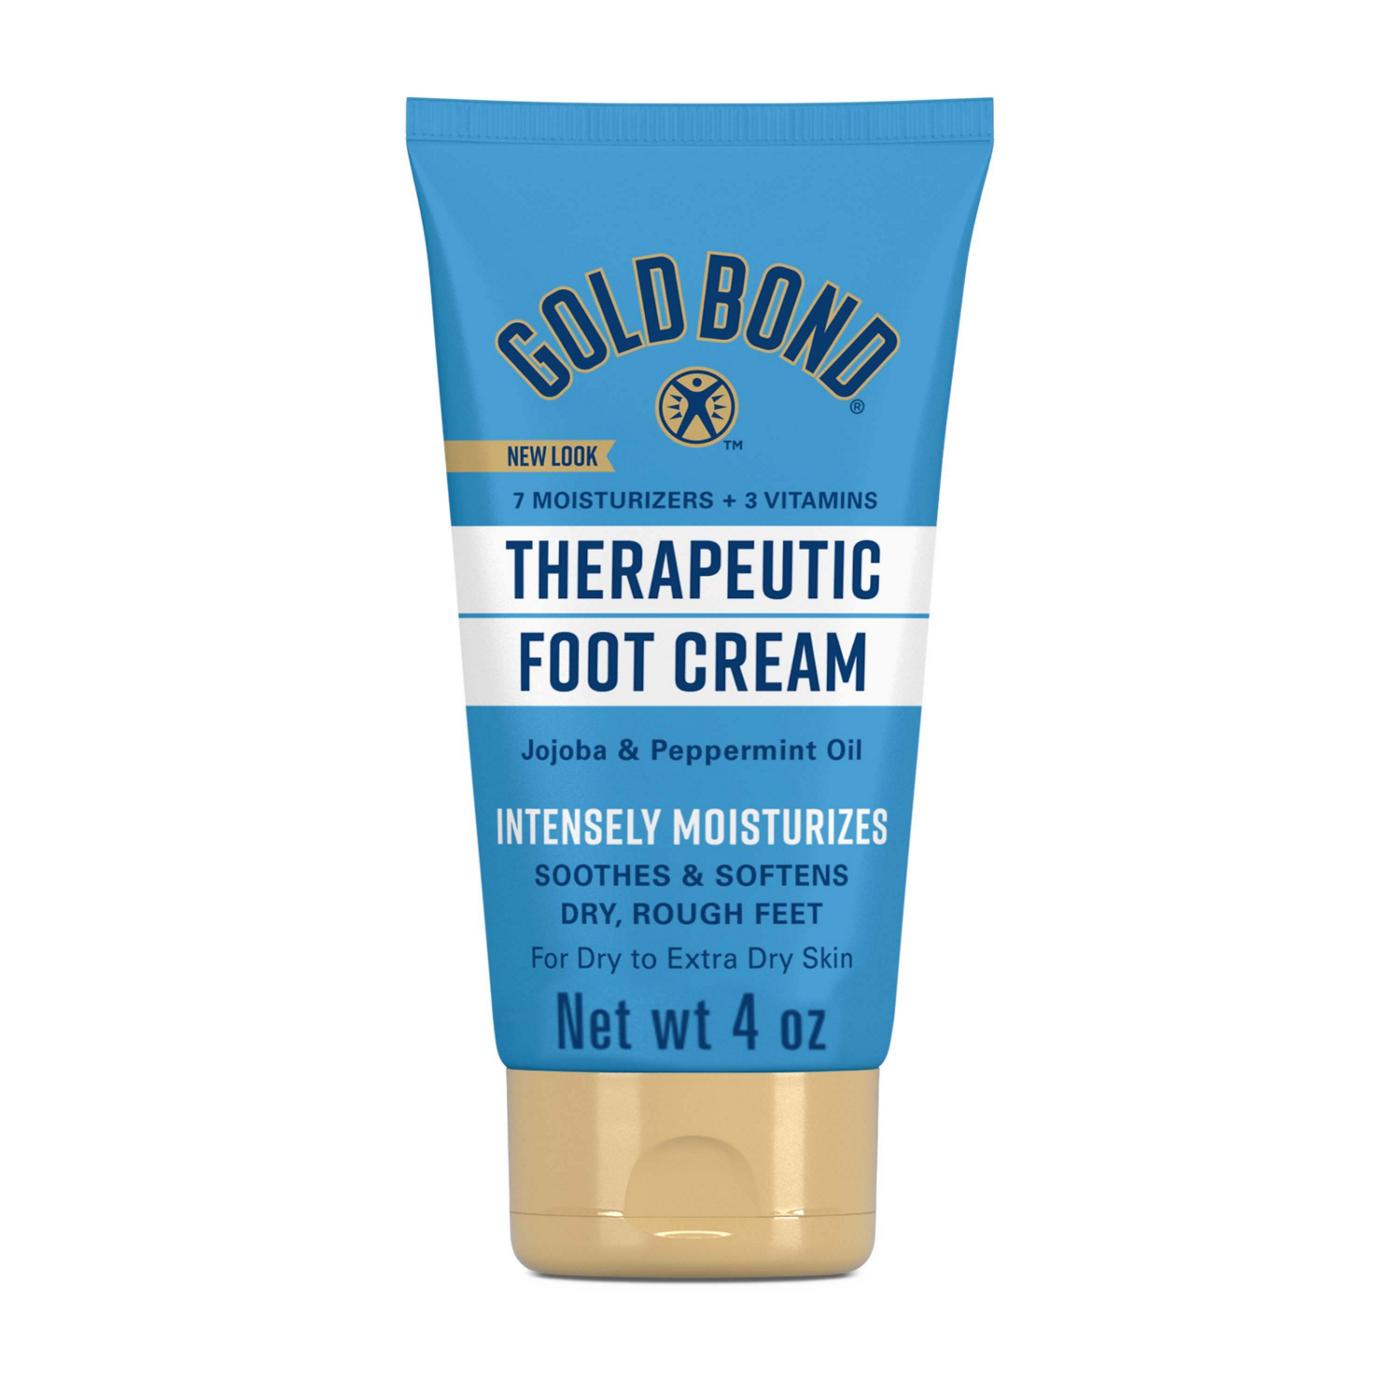 Gold Bond Therapeutic Foot Cream - Jojoba & Peppermint Oil; image 1 of 7